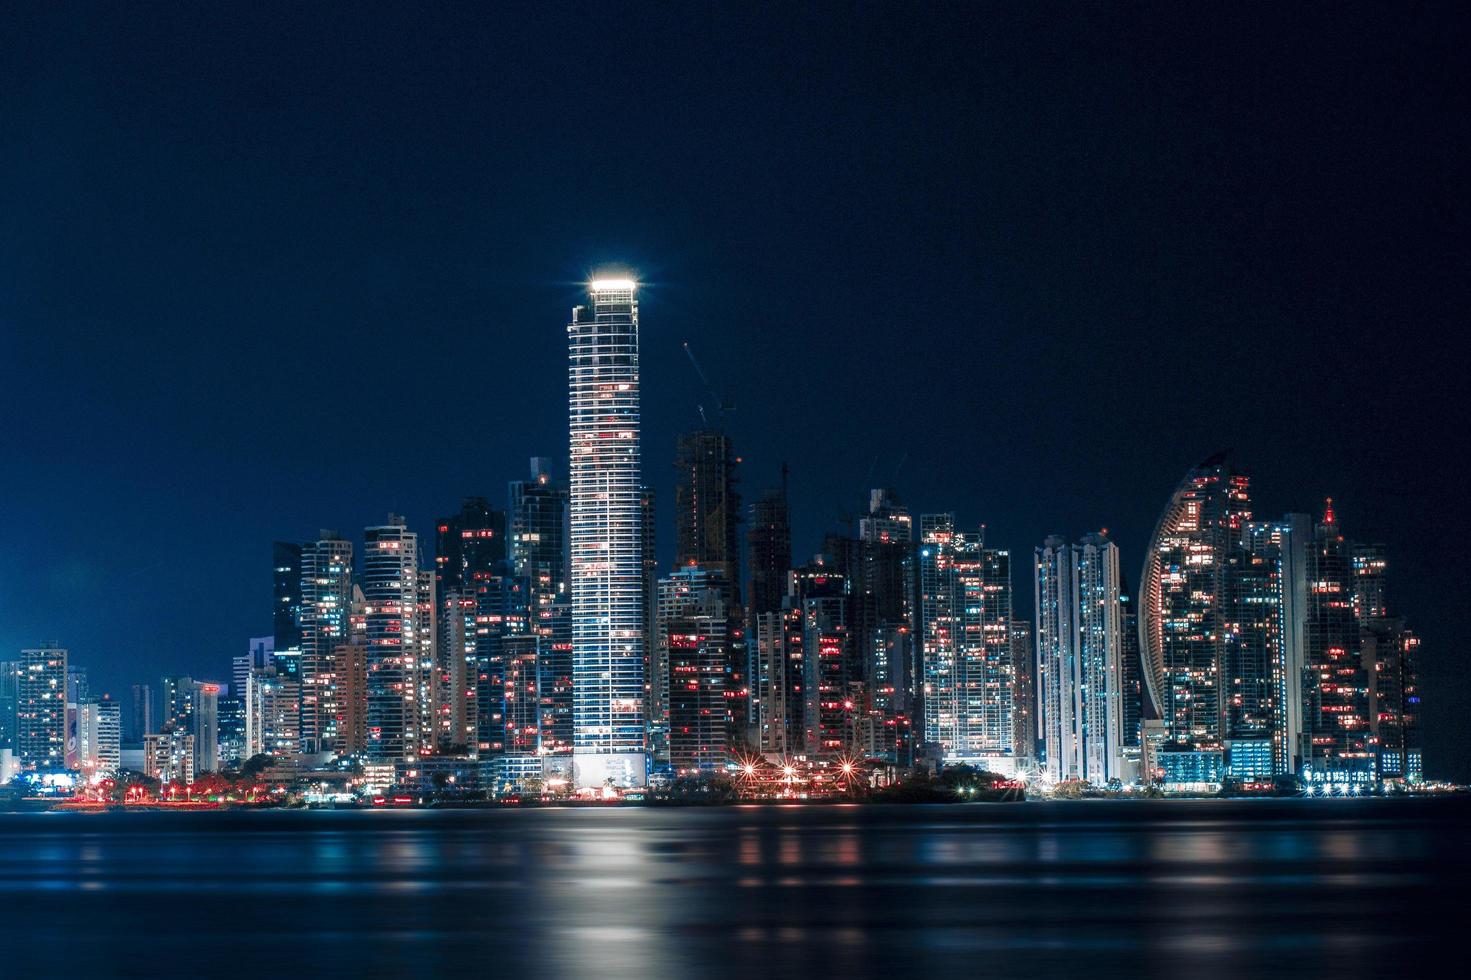 Lighted city skyline during nighttime photo